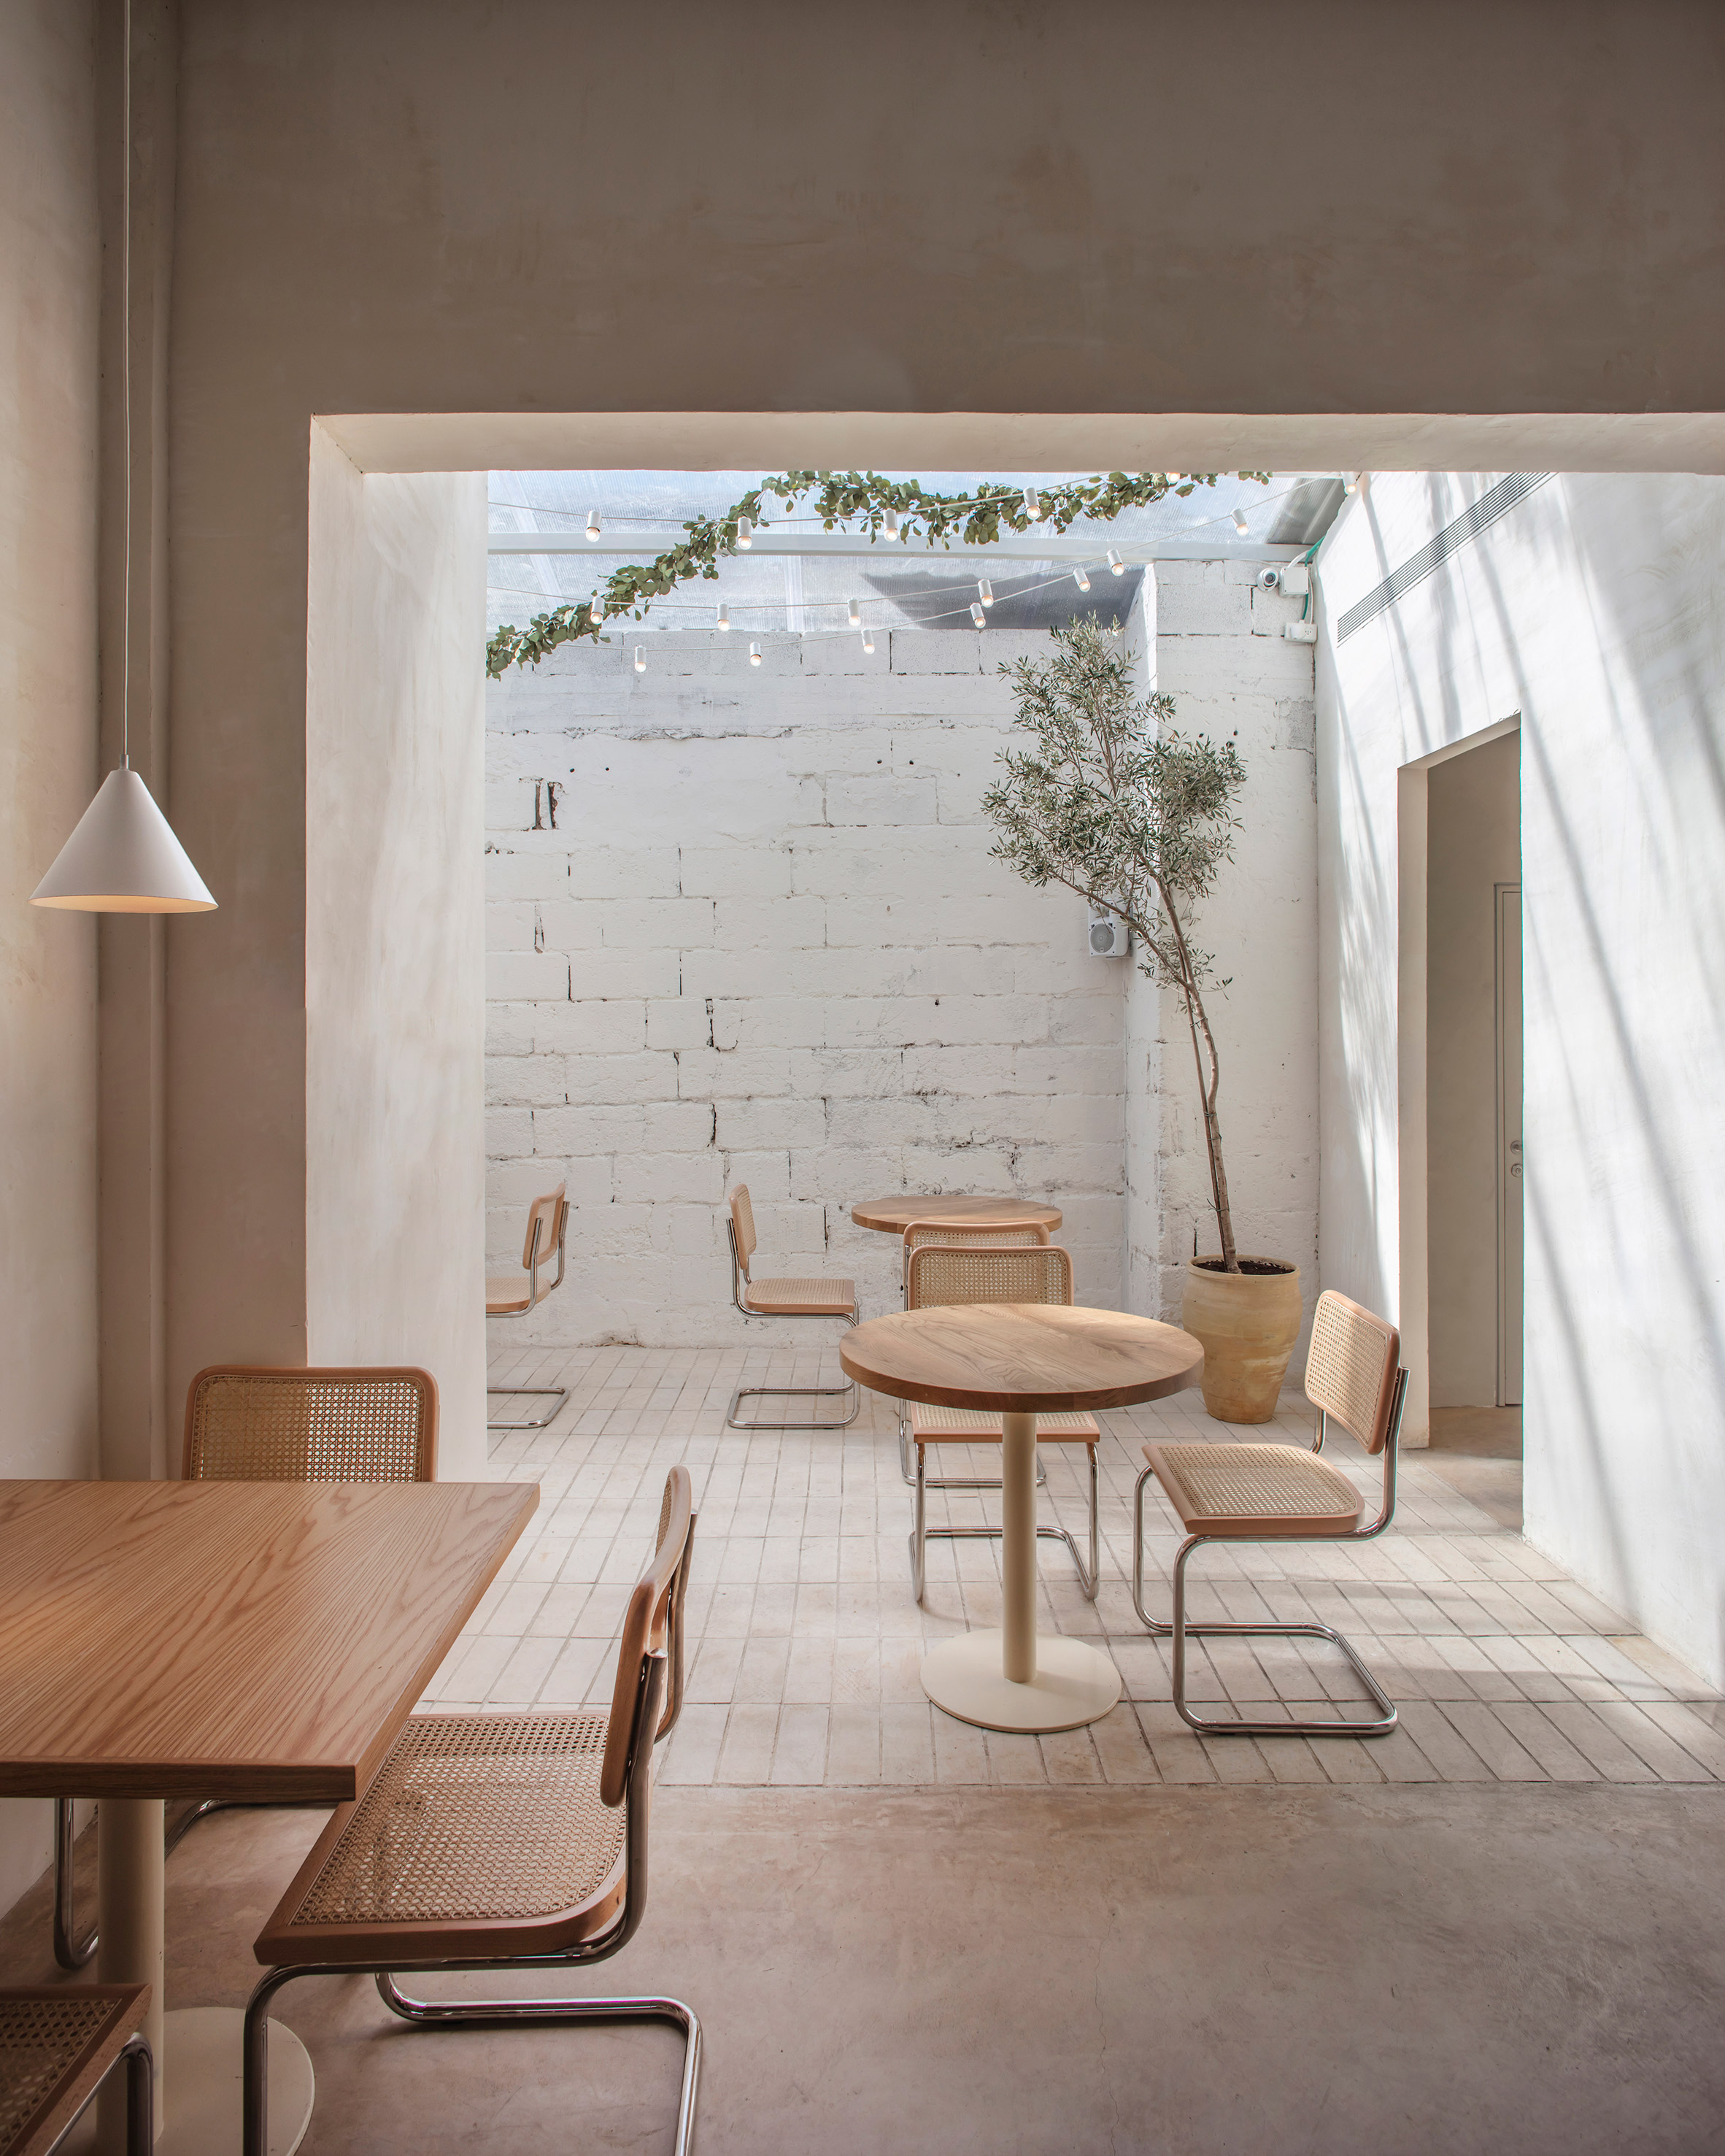 Interiors of Tel Aviv's Opa restaurant, designed by Craft & Bloom and Vered Kadouri